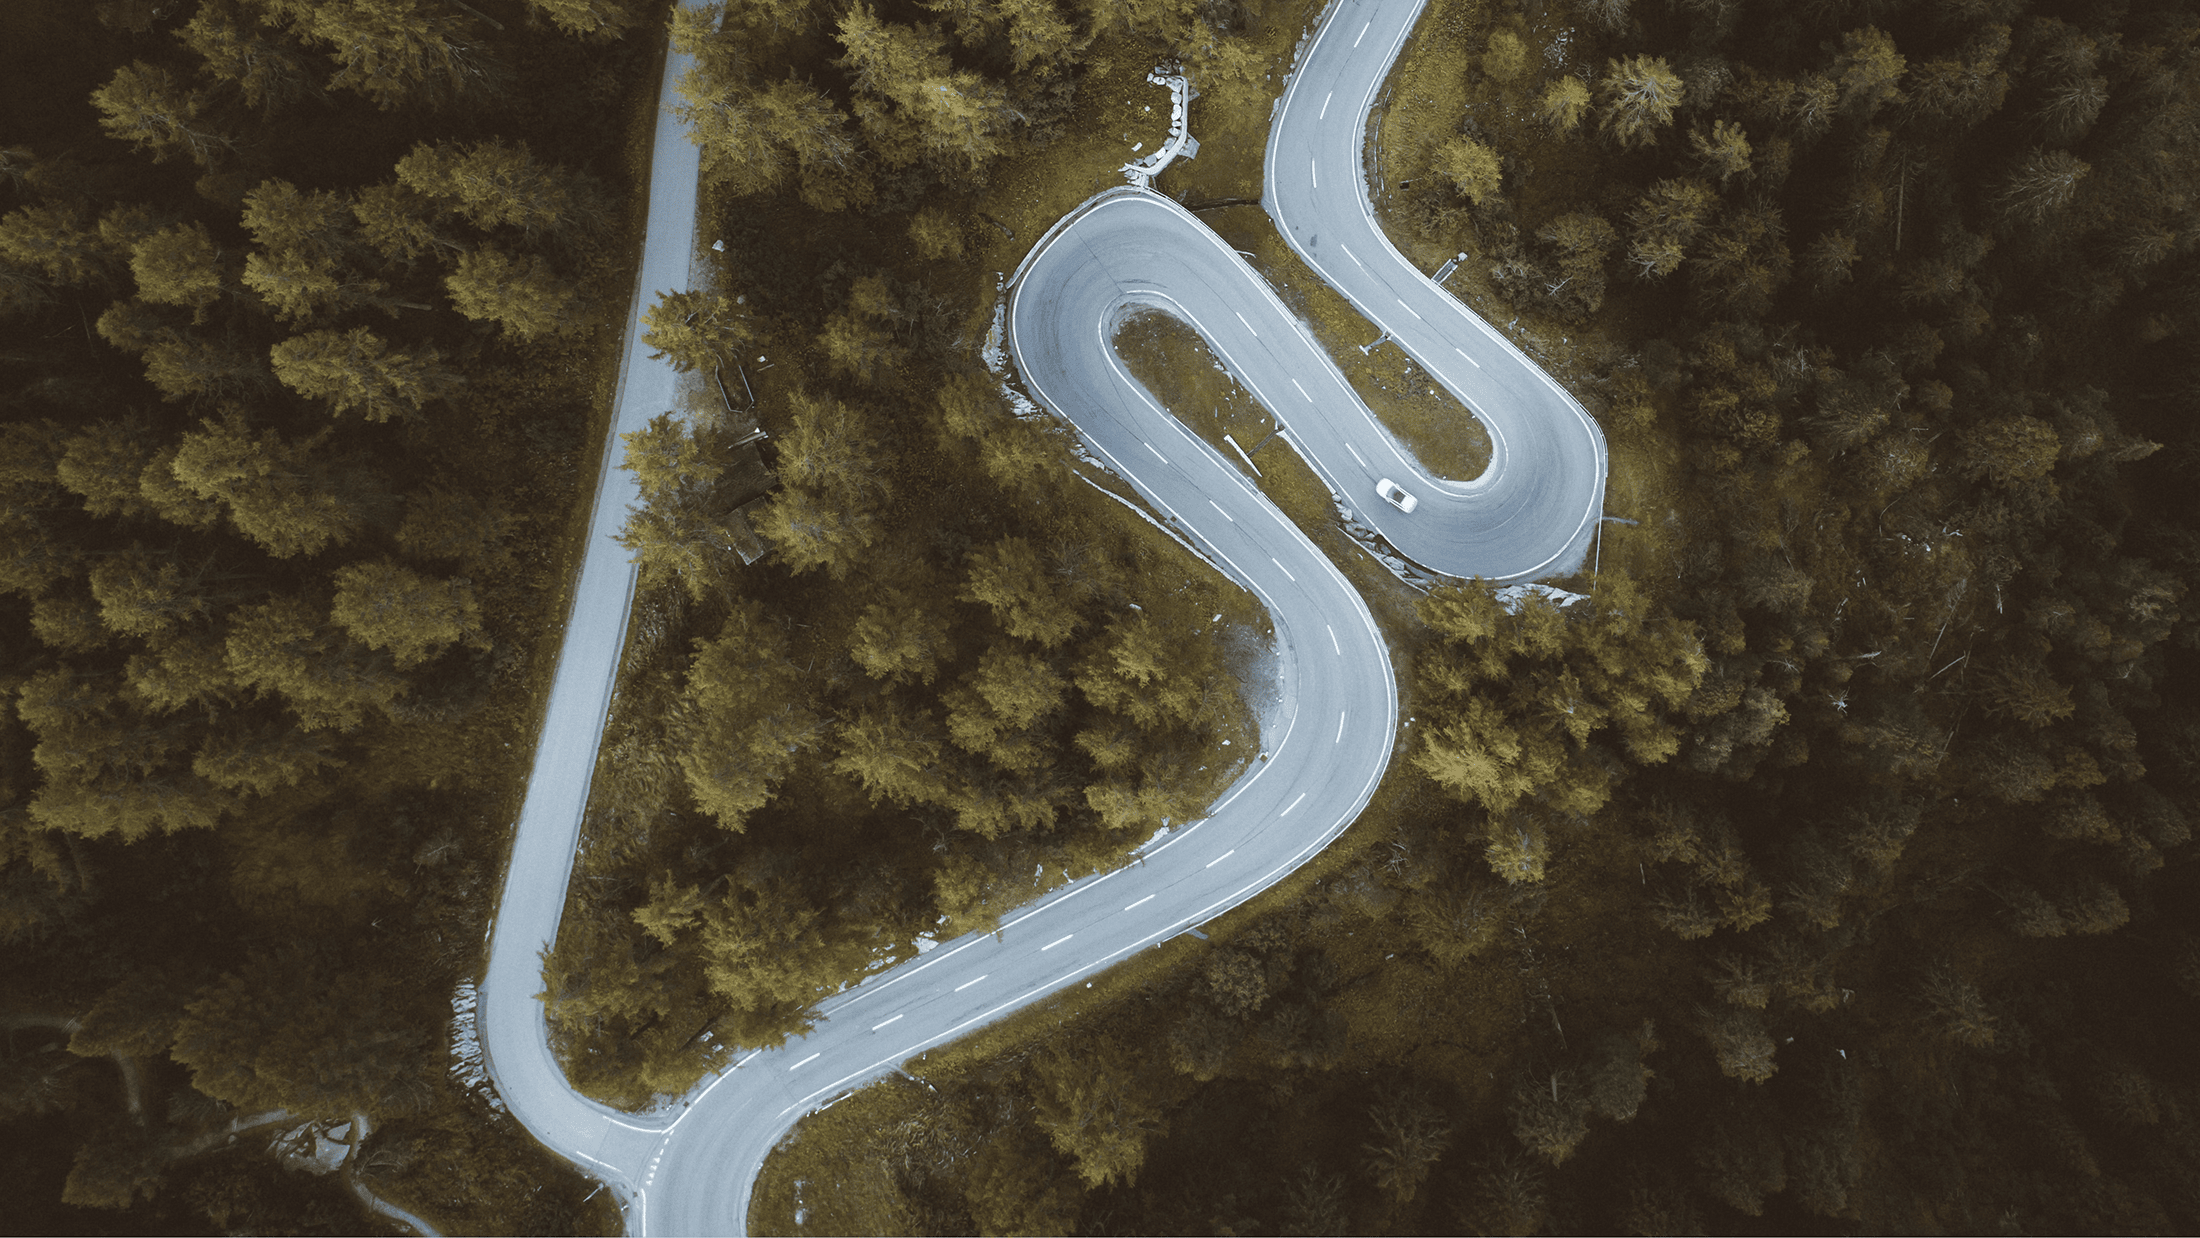 Peaceful mountain roads